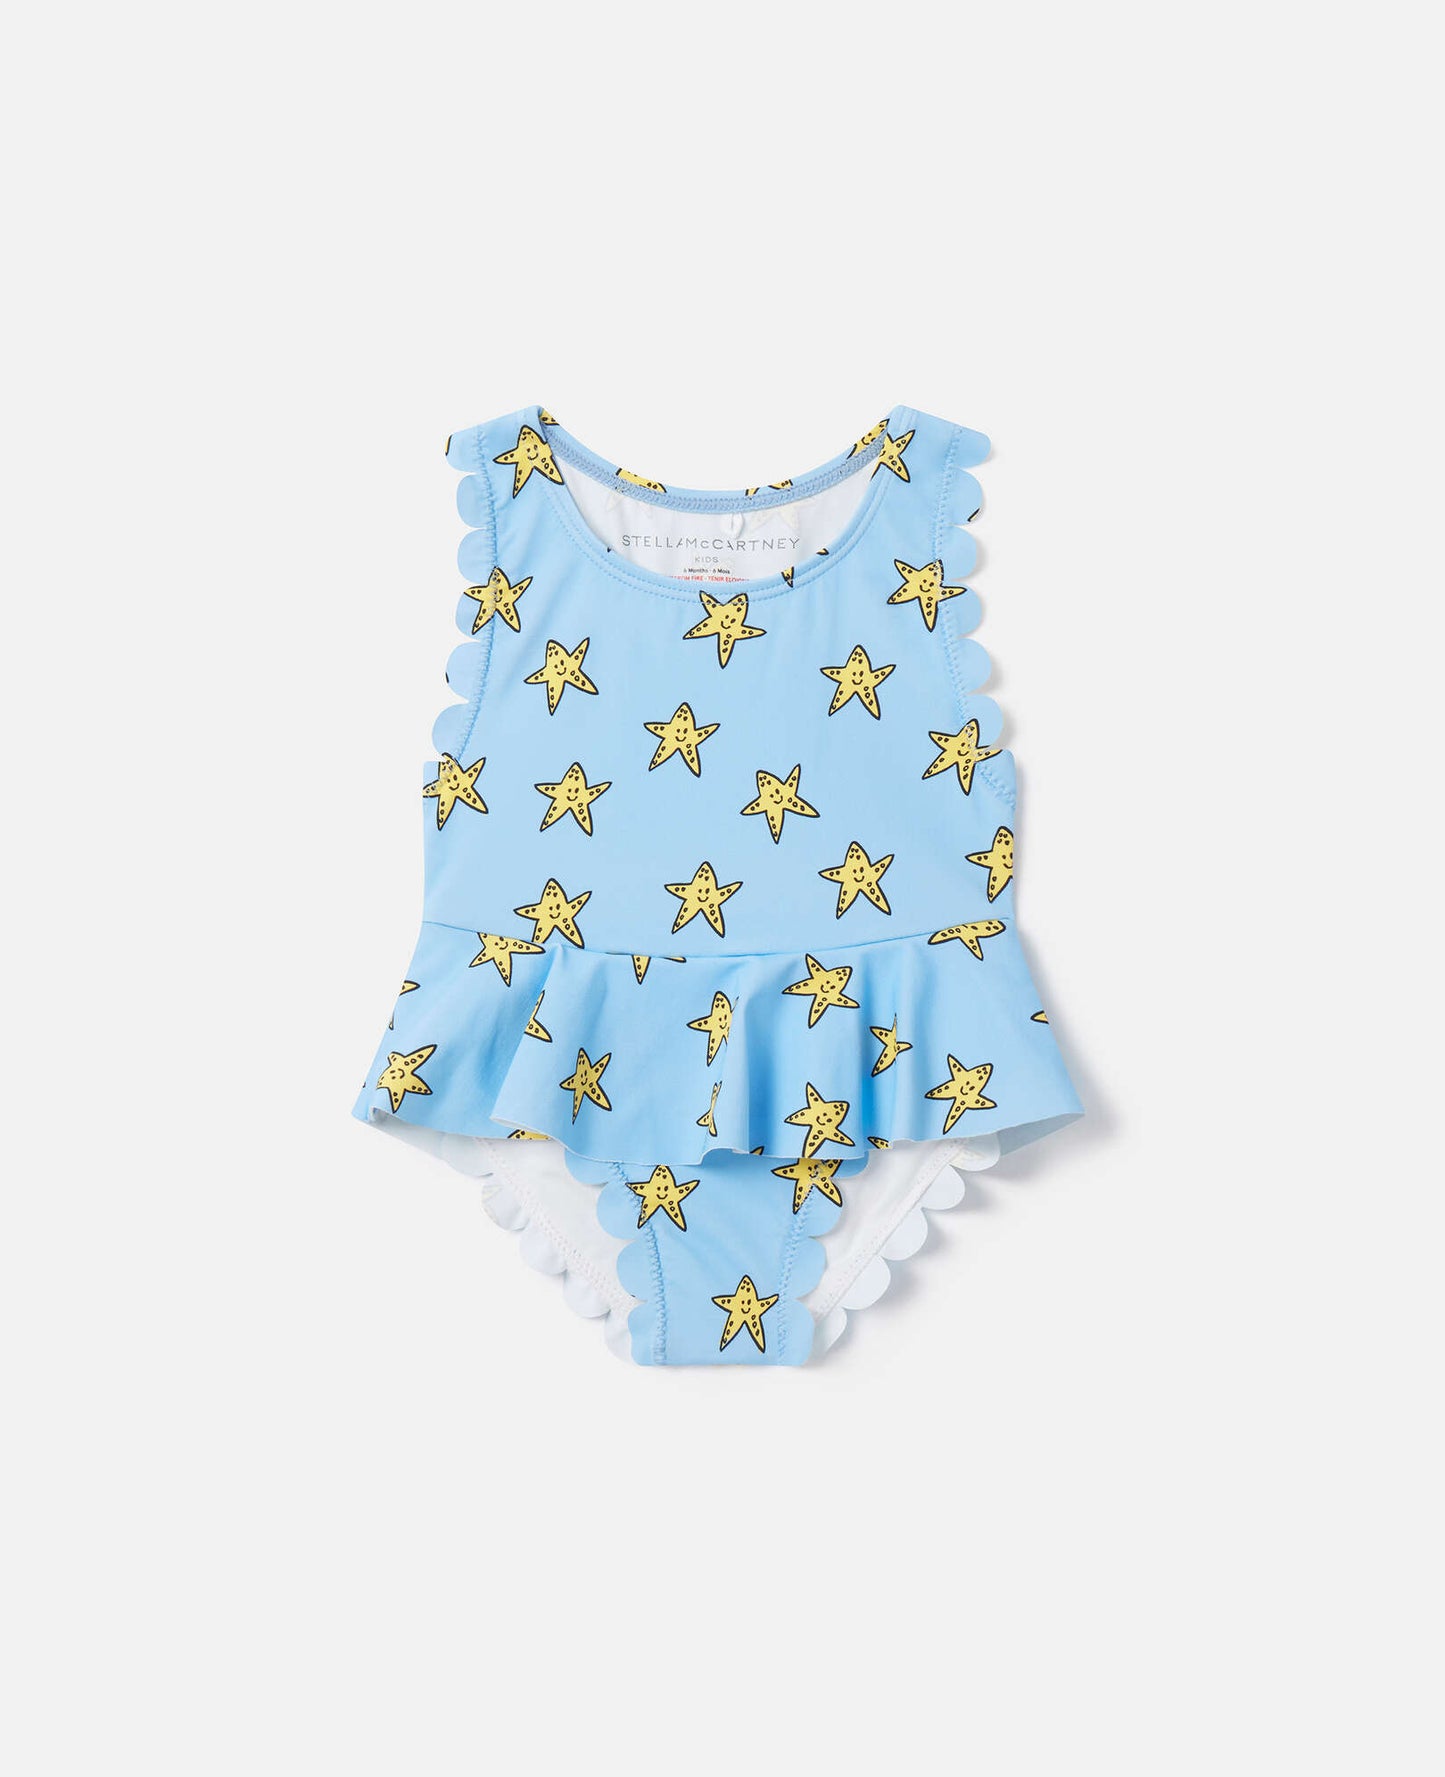 Smiling Stella Star Print Swimsuit